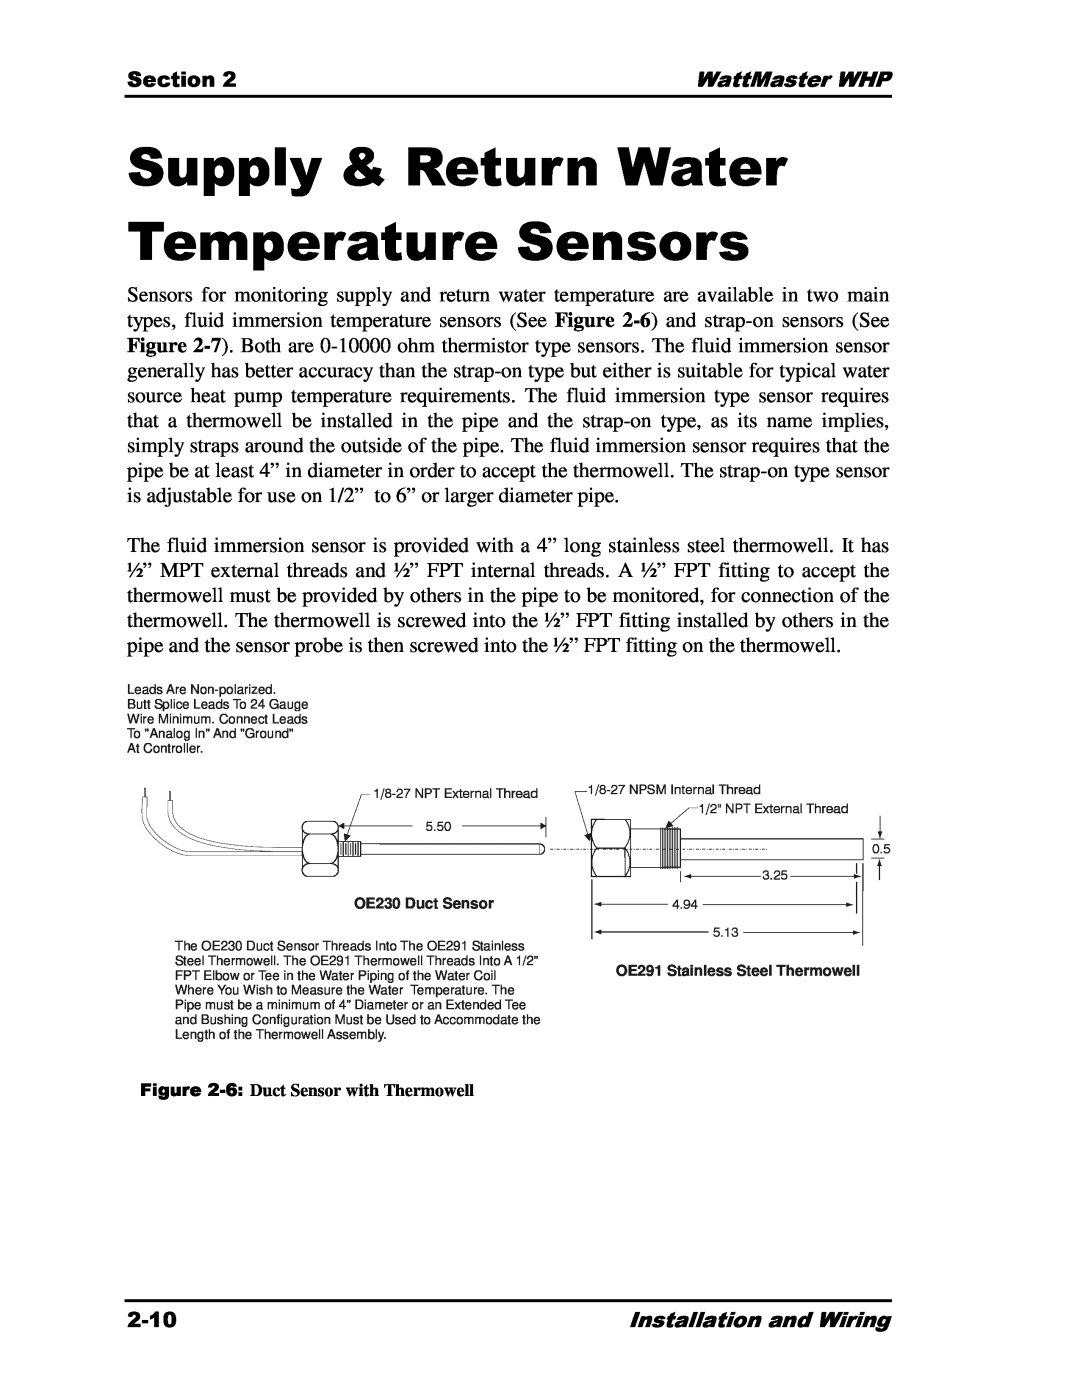 Heat Controller Water Source Heat Pump manual 6, Supply & Return Water Temperature Sensors 